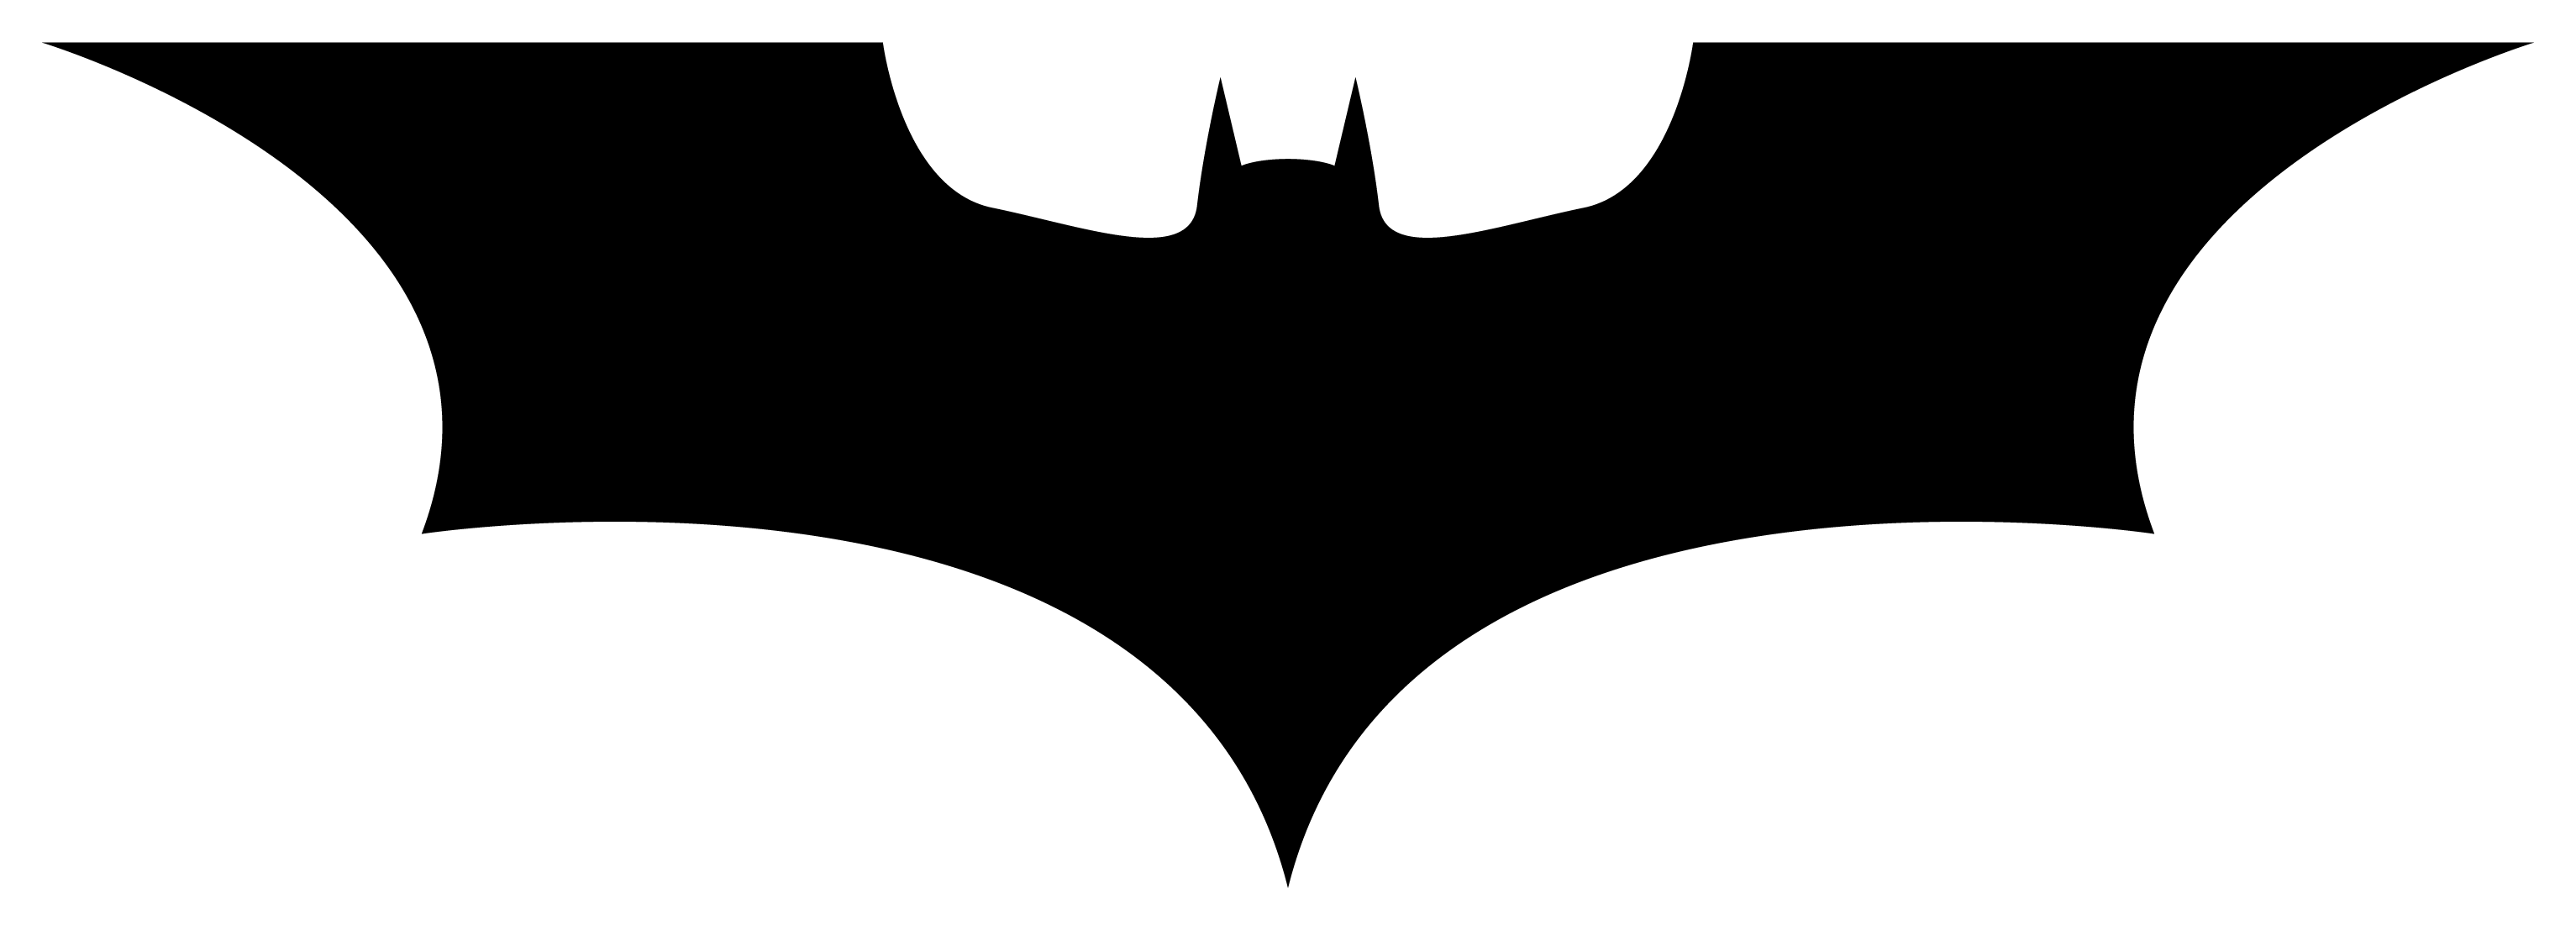 Batman Bat Logo - Bat Symbol Stencil Batman Pic. Nicky. Stencils, Batman